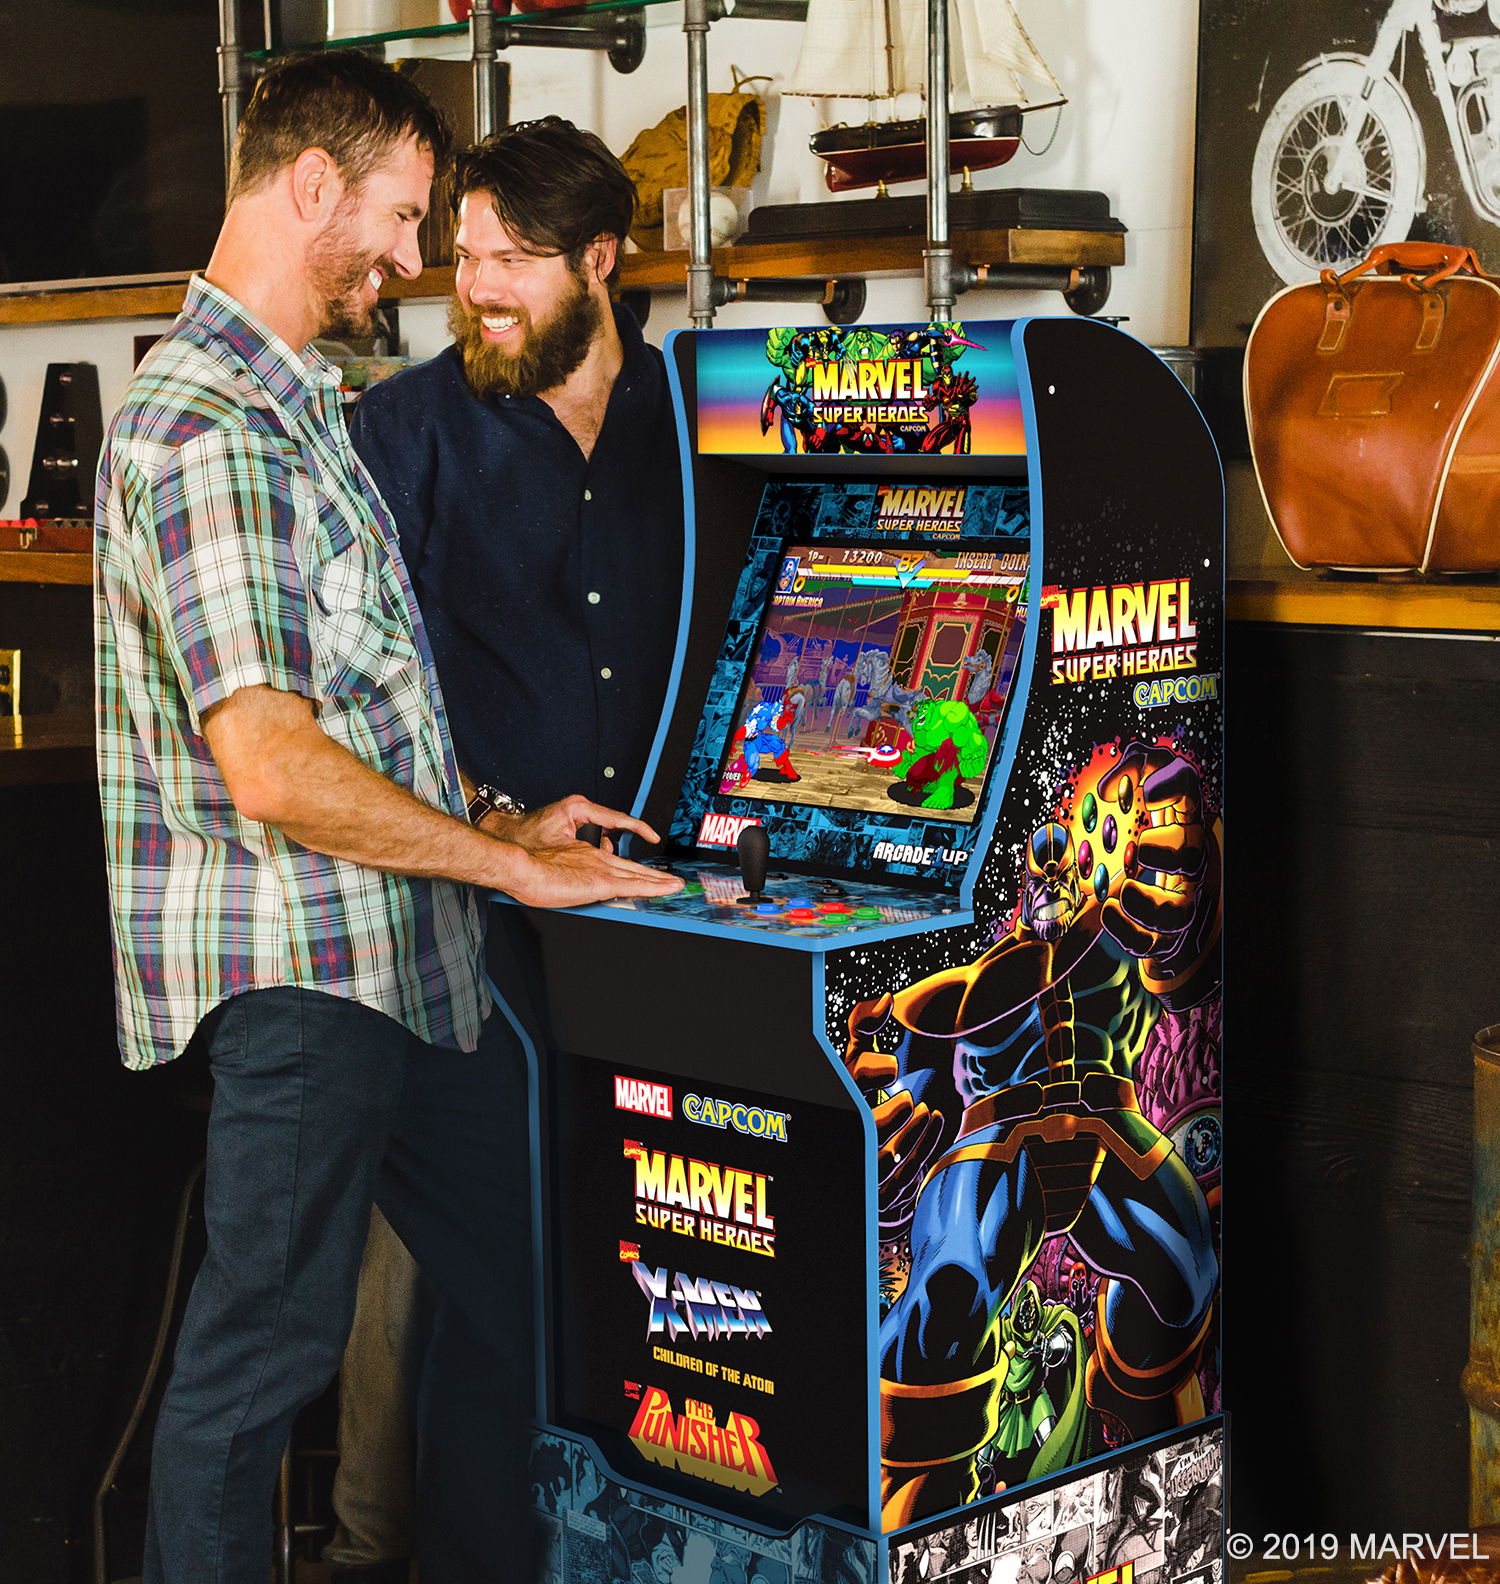 arcade1up-marvel-heroes-arcade-cabinet